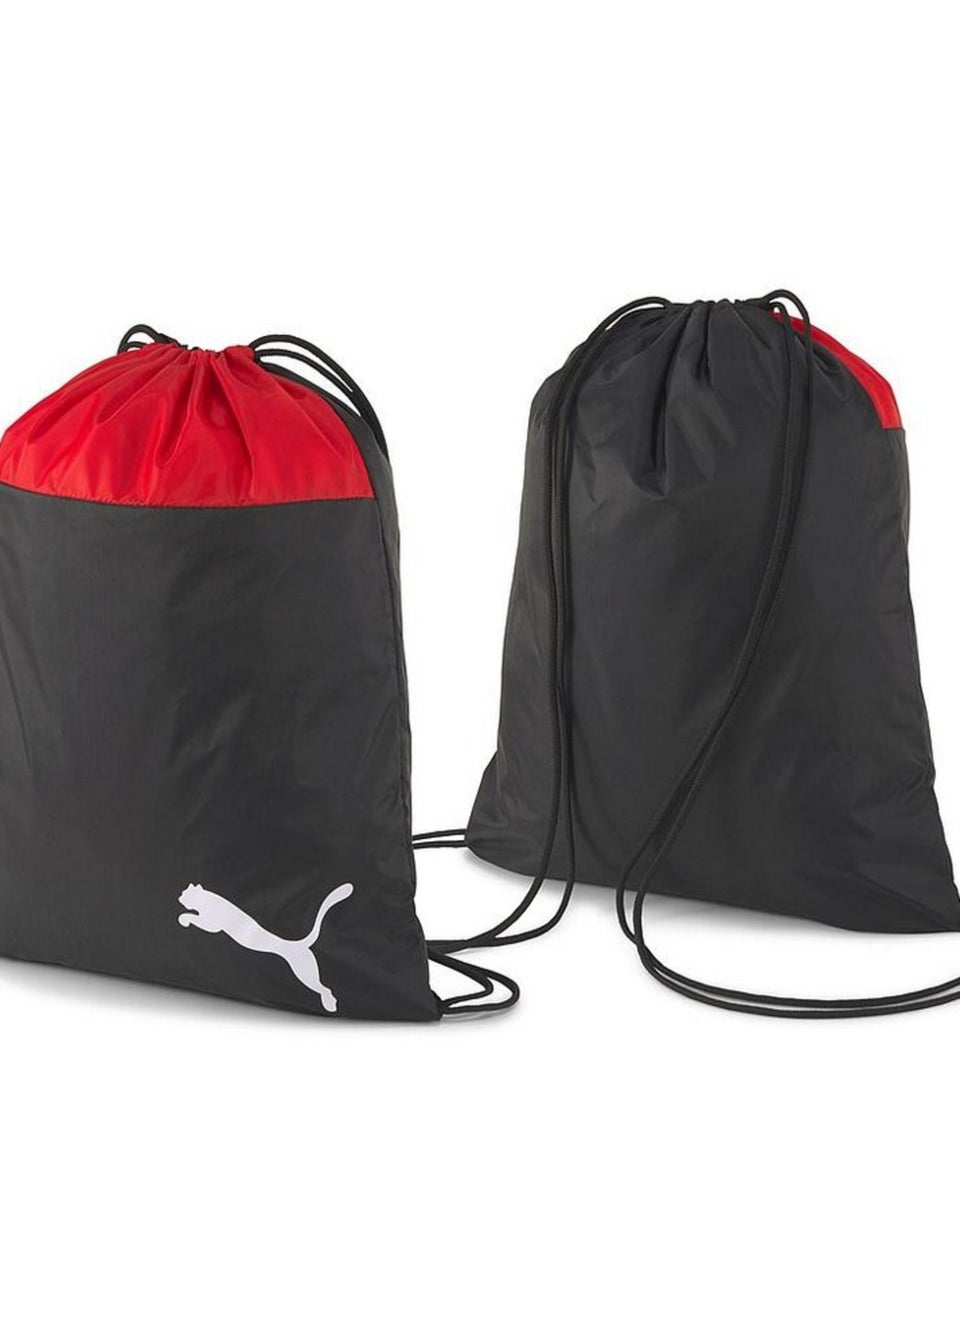 Puma Black/Red Team Goal 23 Drawstring Bag